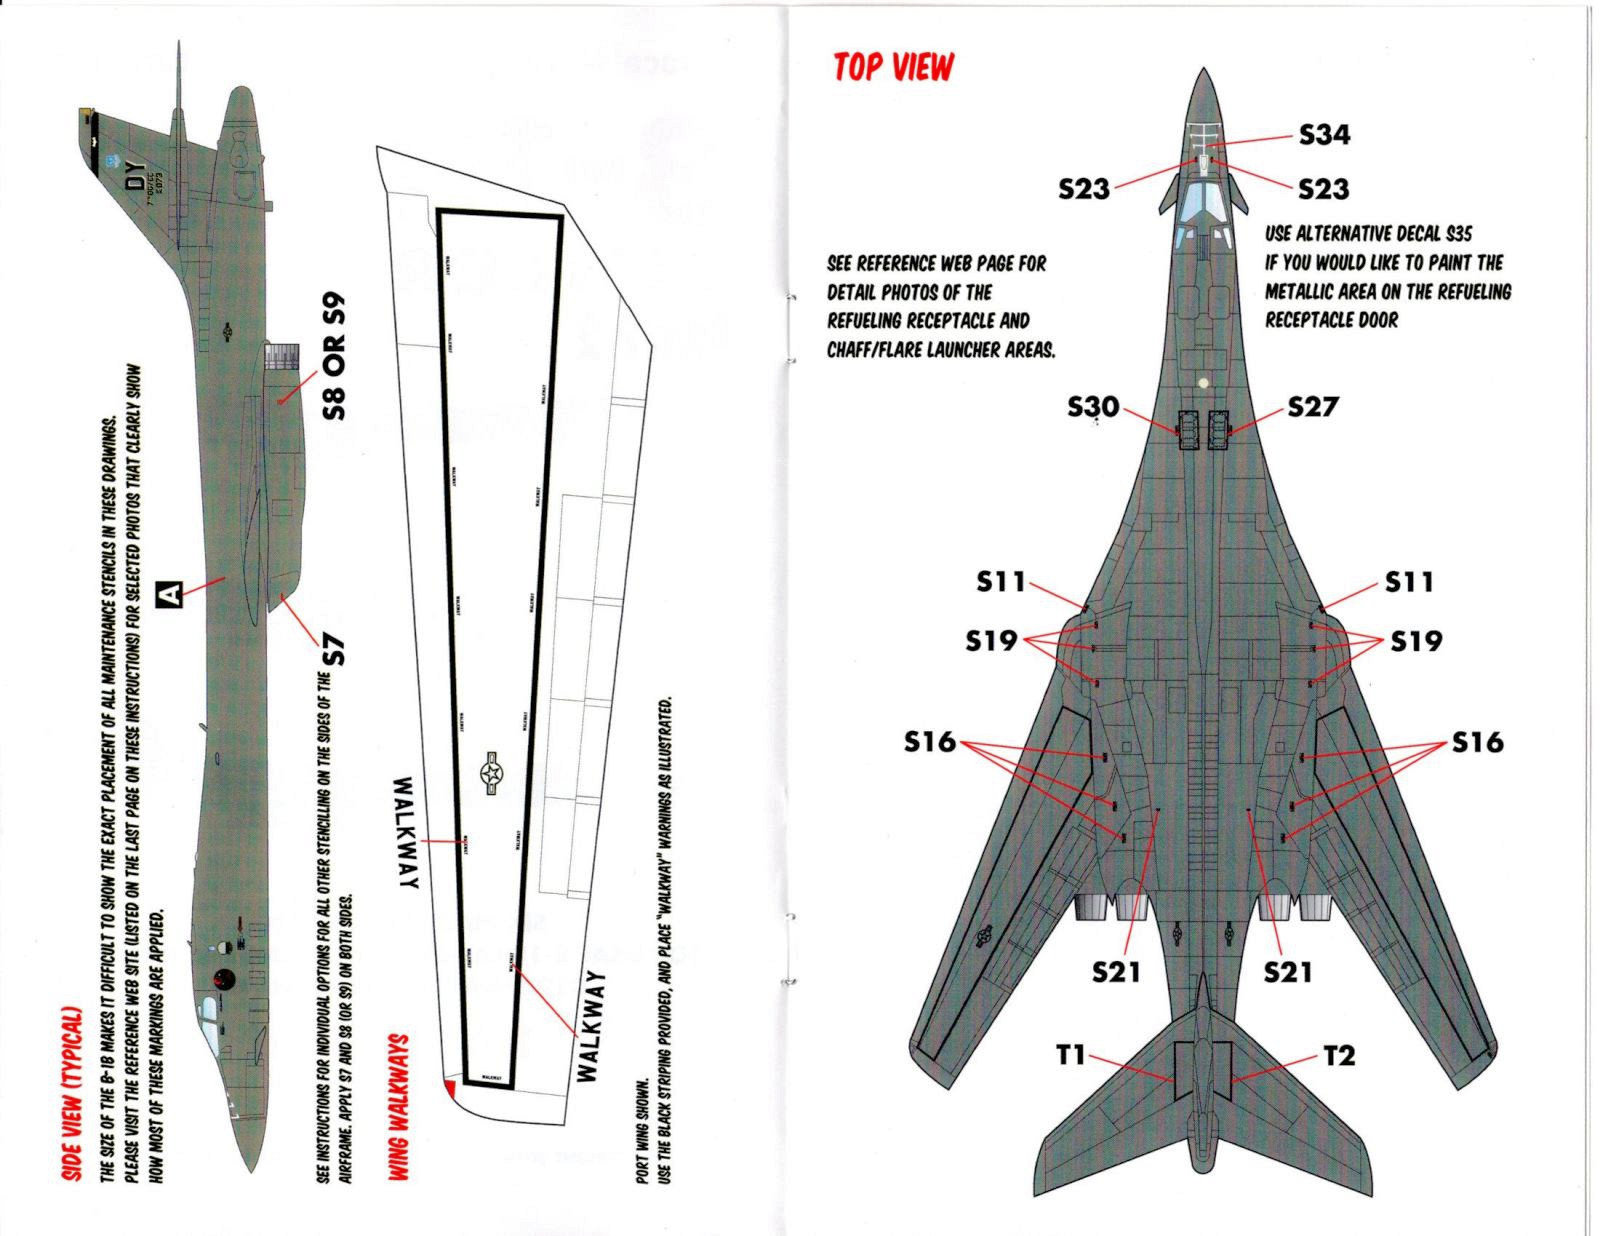 WATERSLIDE Decal Sheet B-1B Lancer Part 2 Caracal Models CARCD48144 1:48 Decals